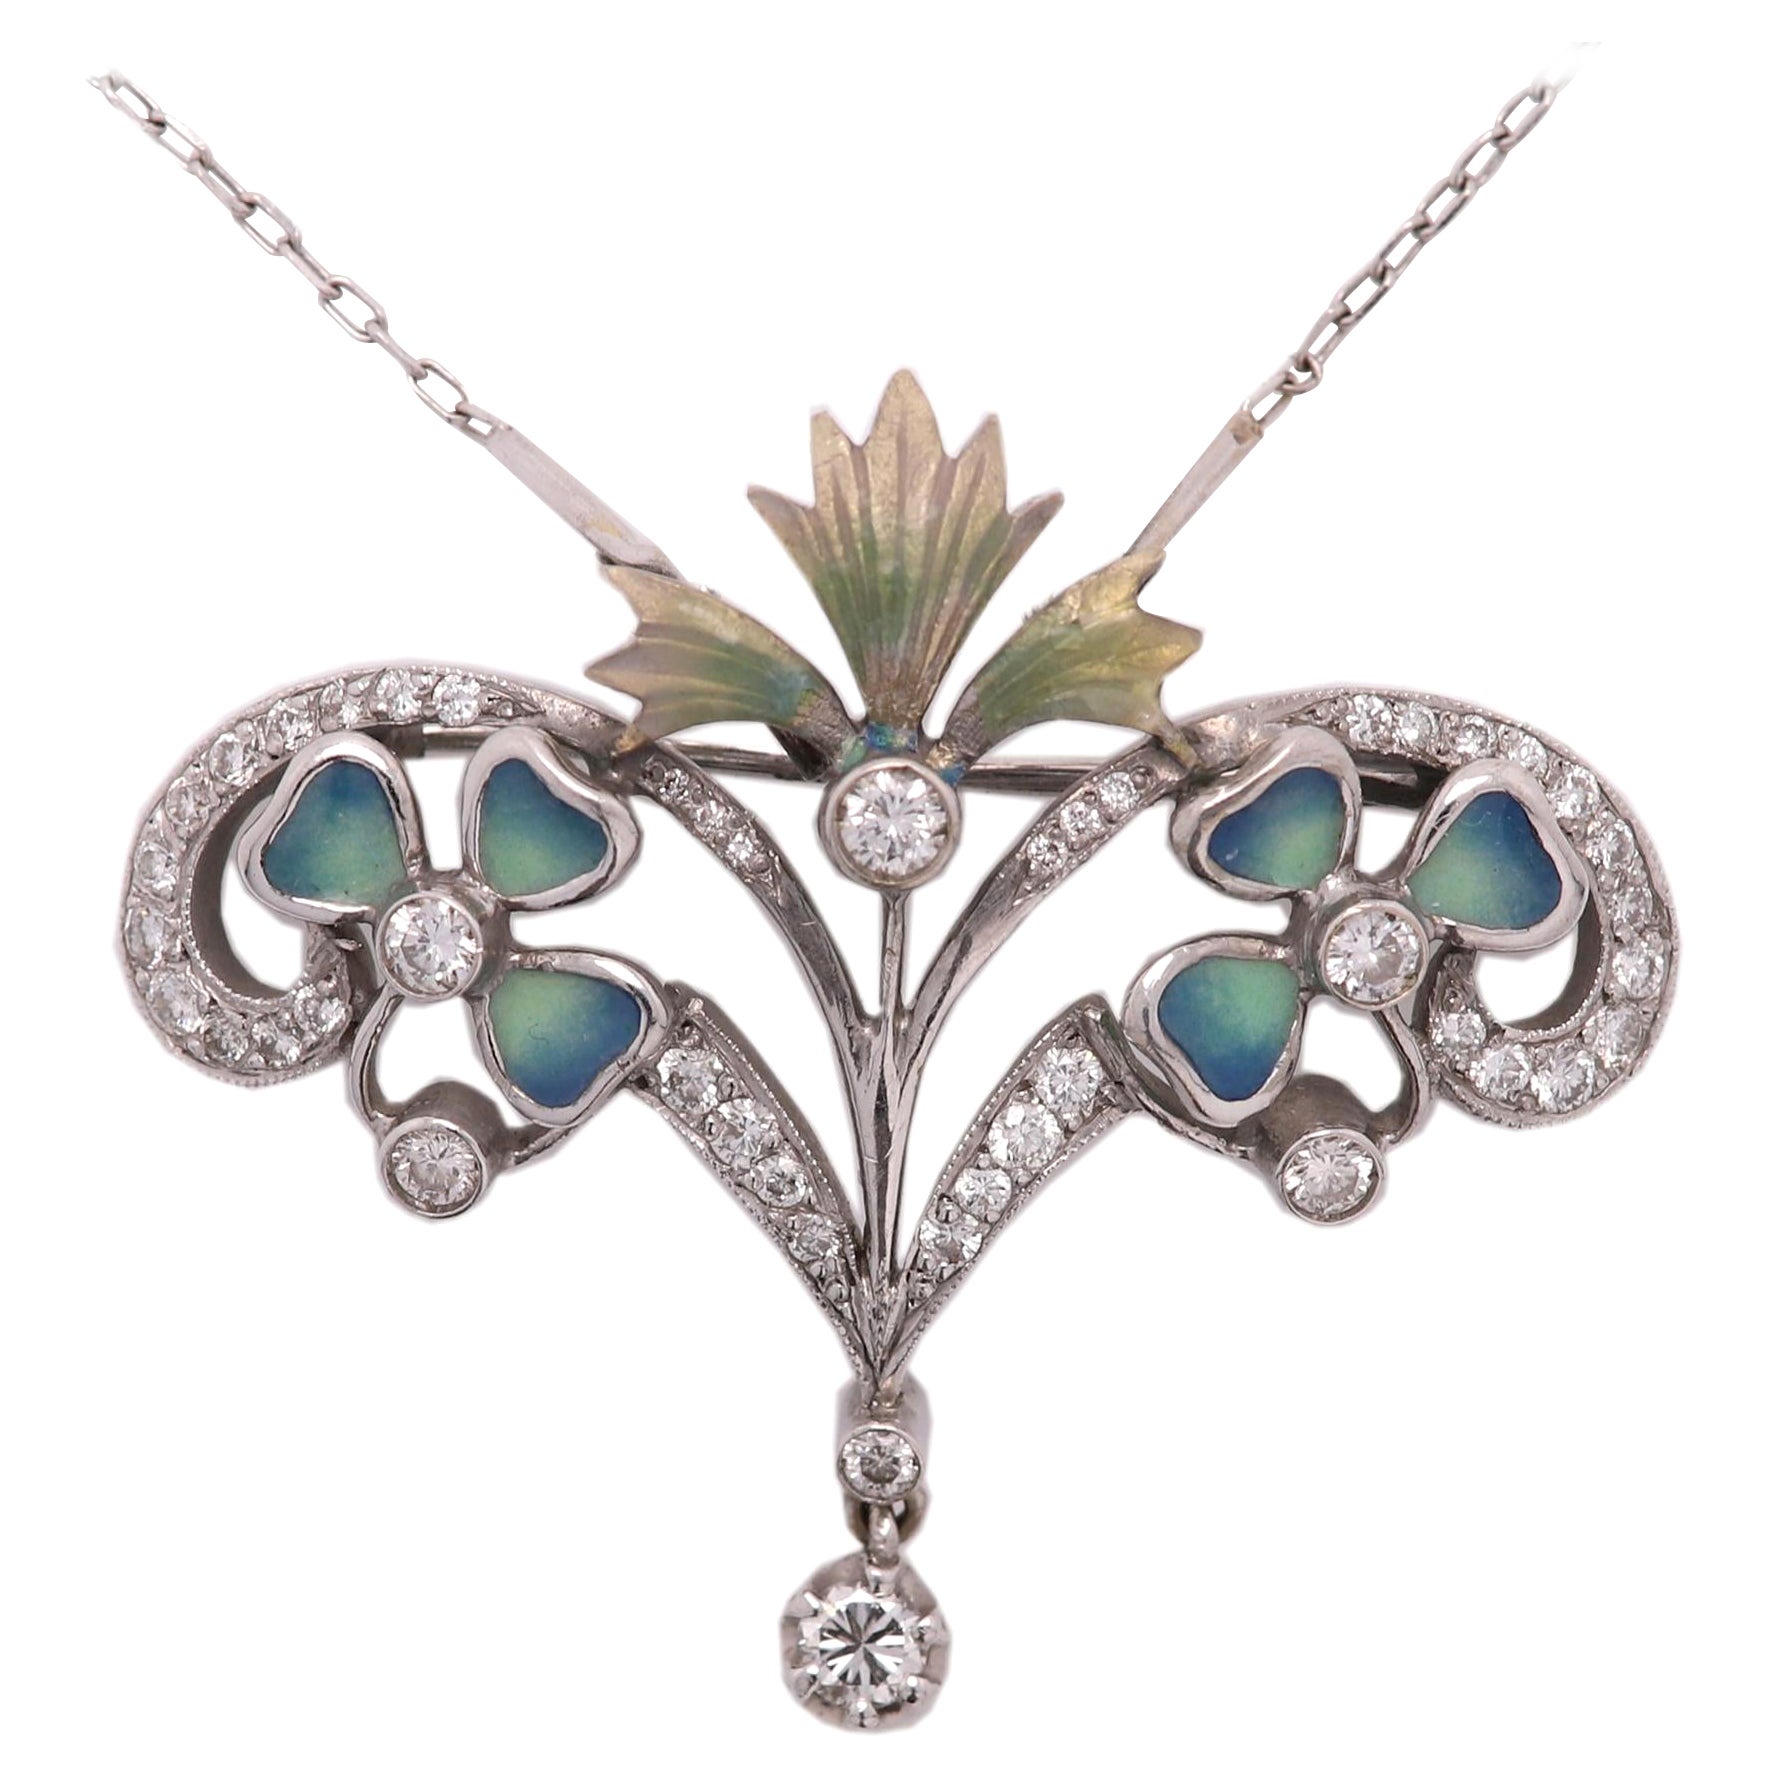 Art Nouveau Enamel and Diamond Necklace Brooch 18 Karat Gold Flower Style 